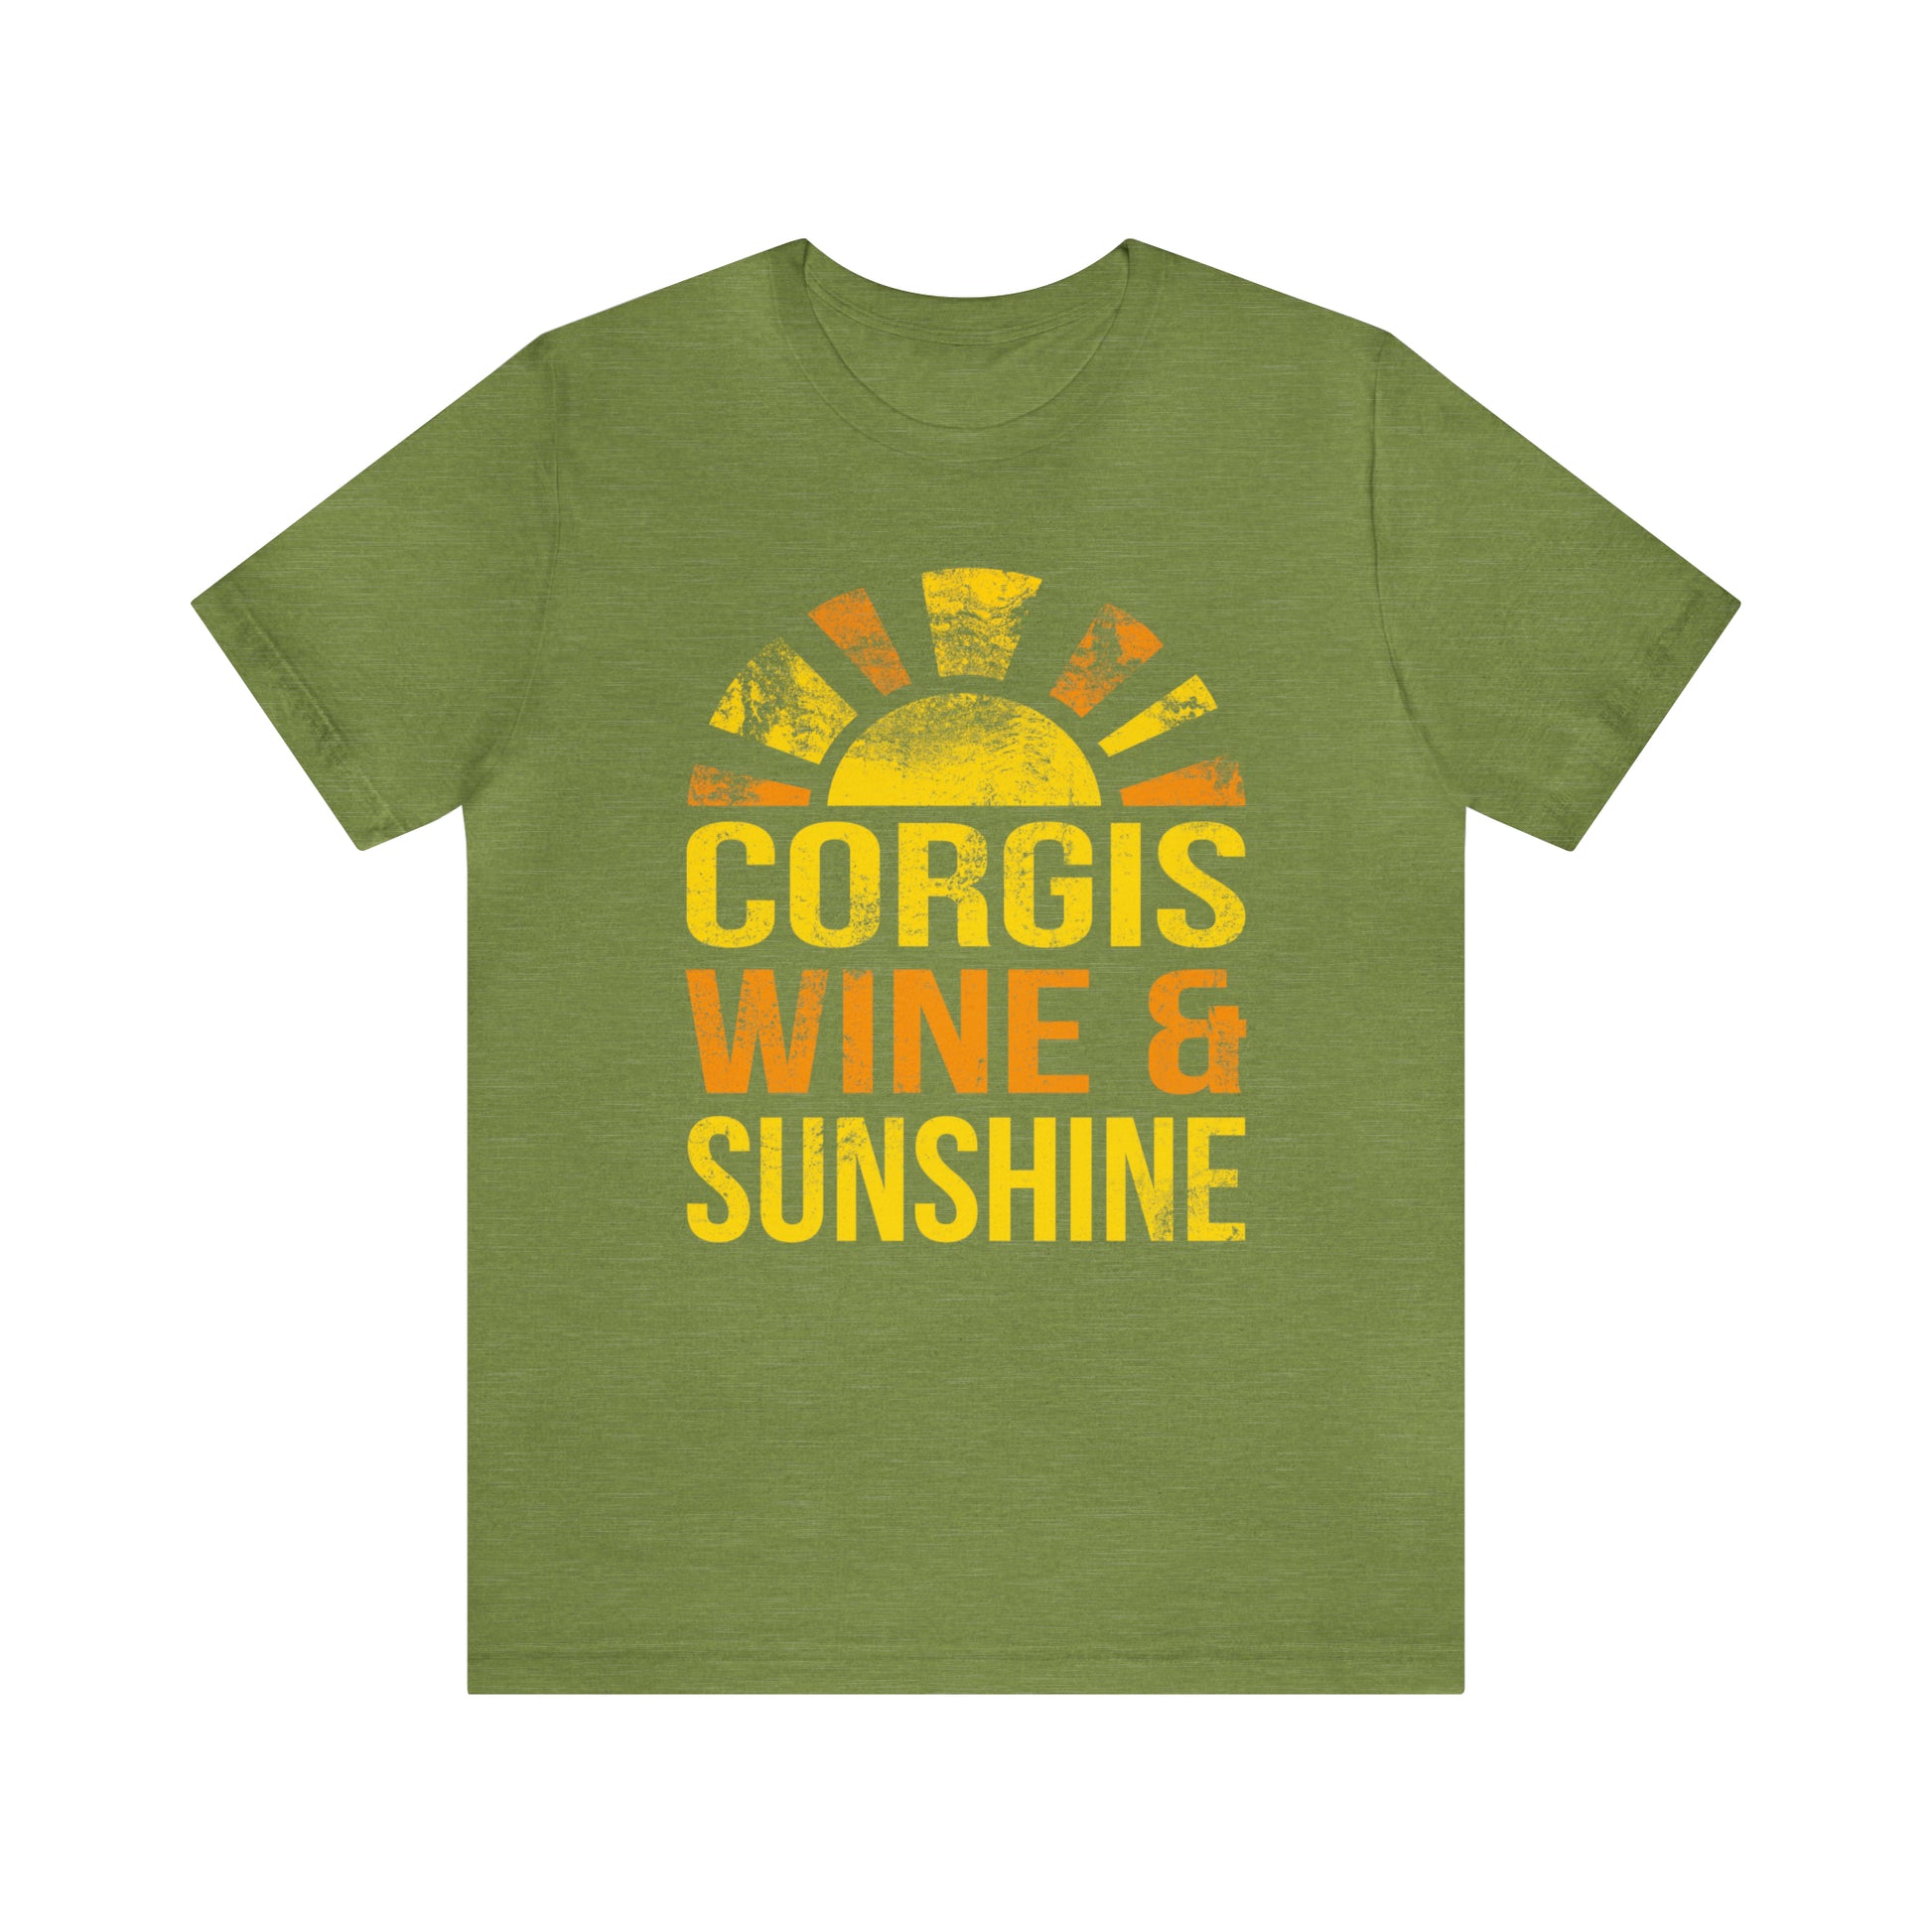 green olive army corgis wine sunshine summer woman man t-shirt unisex short sleeve shirt grunge distressed